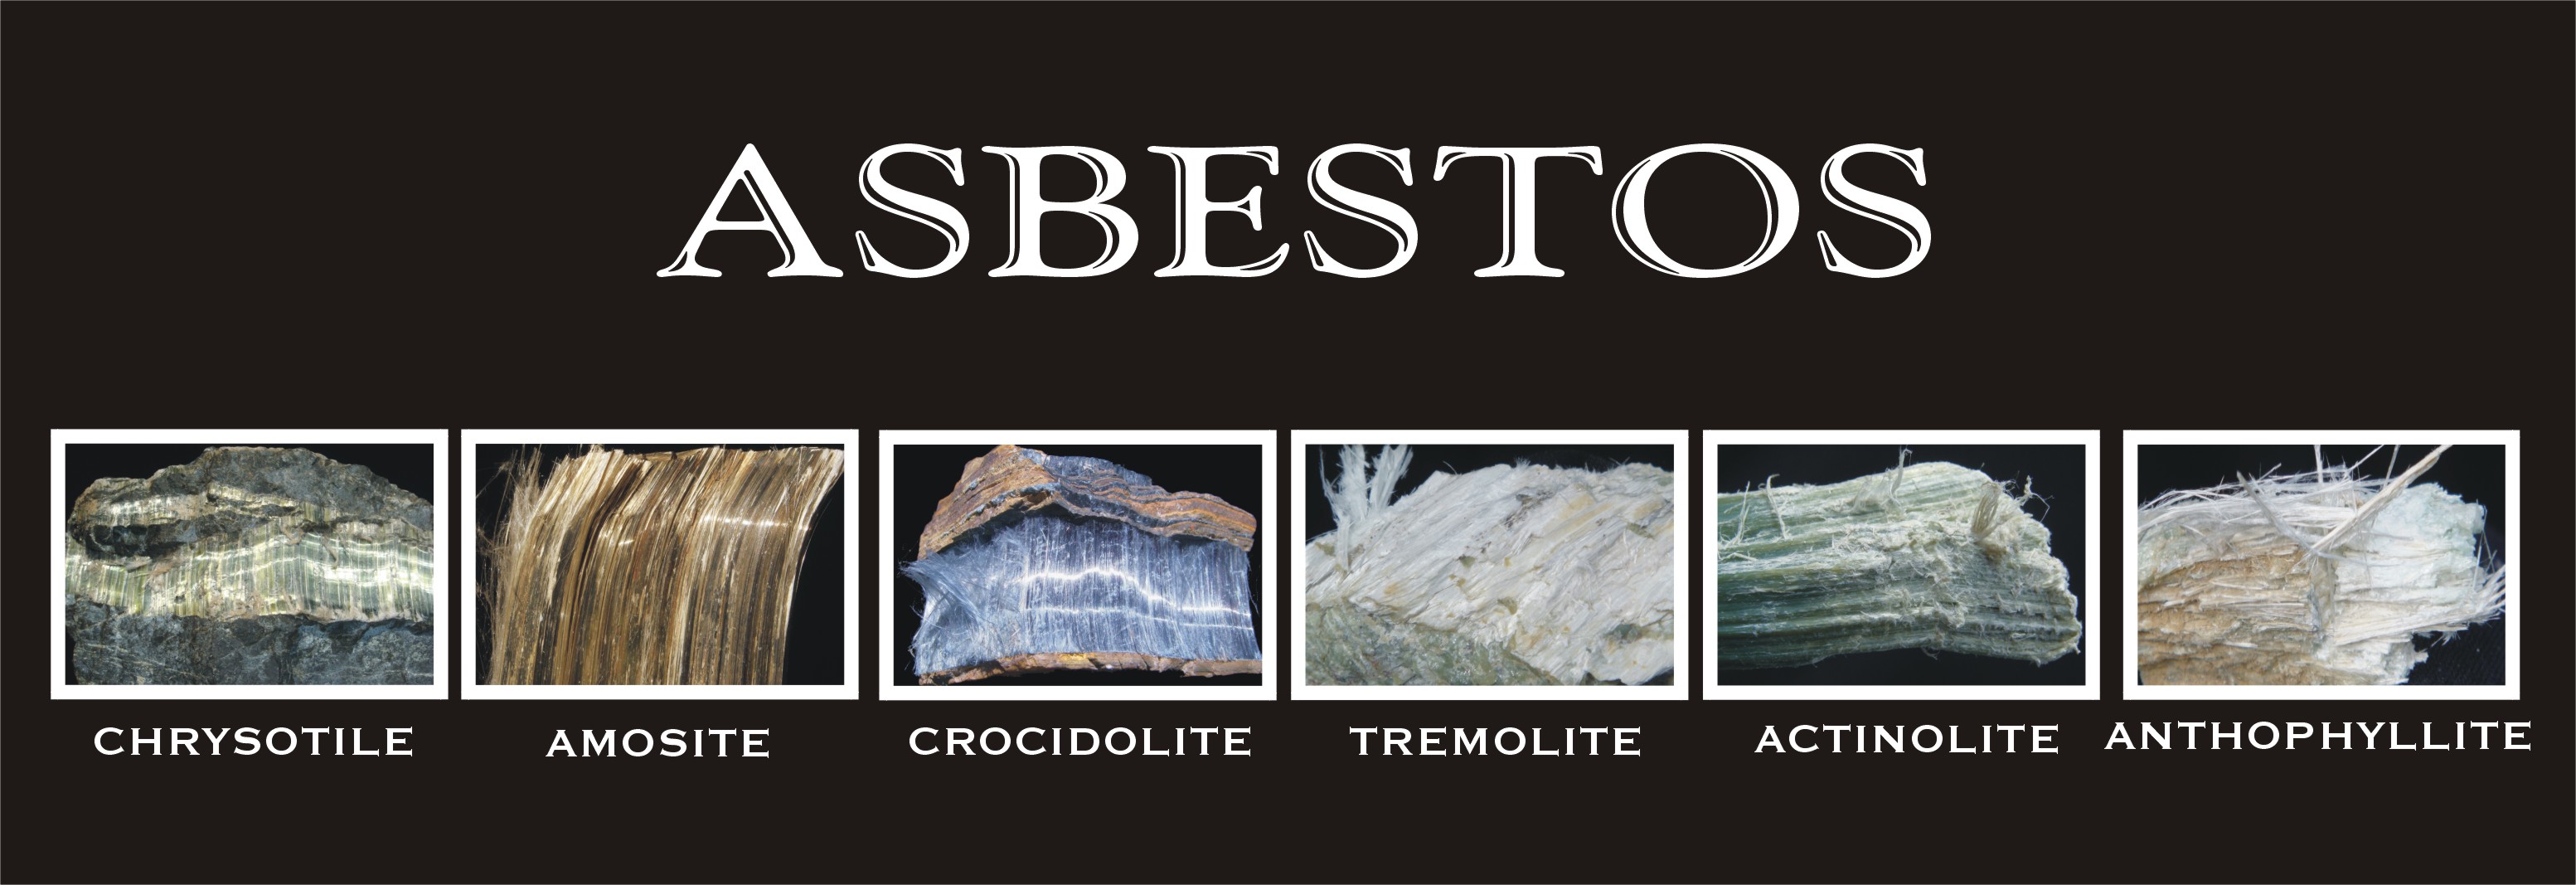 crocidolite asbestos